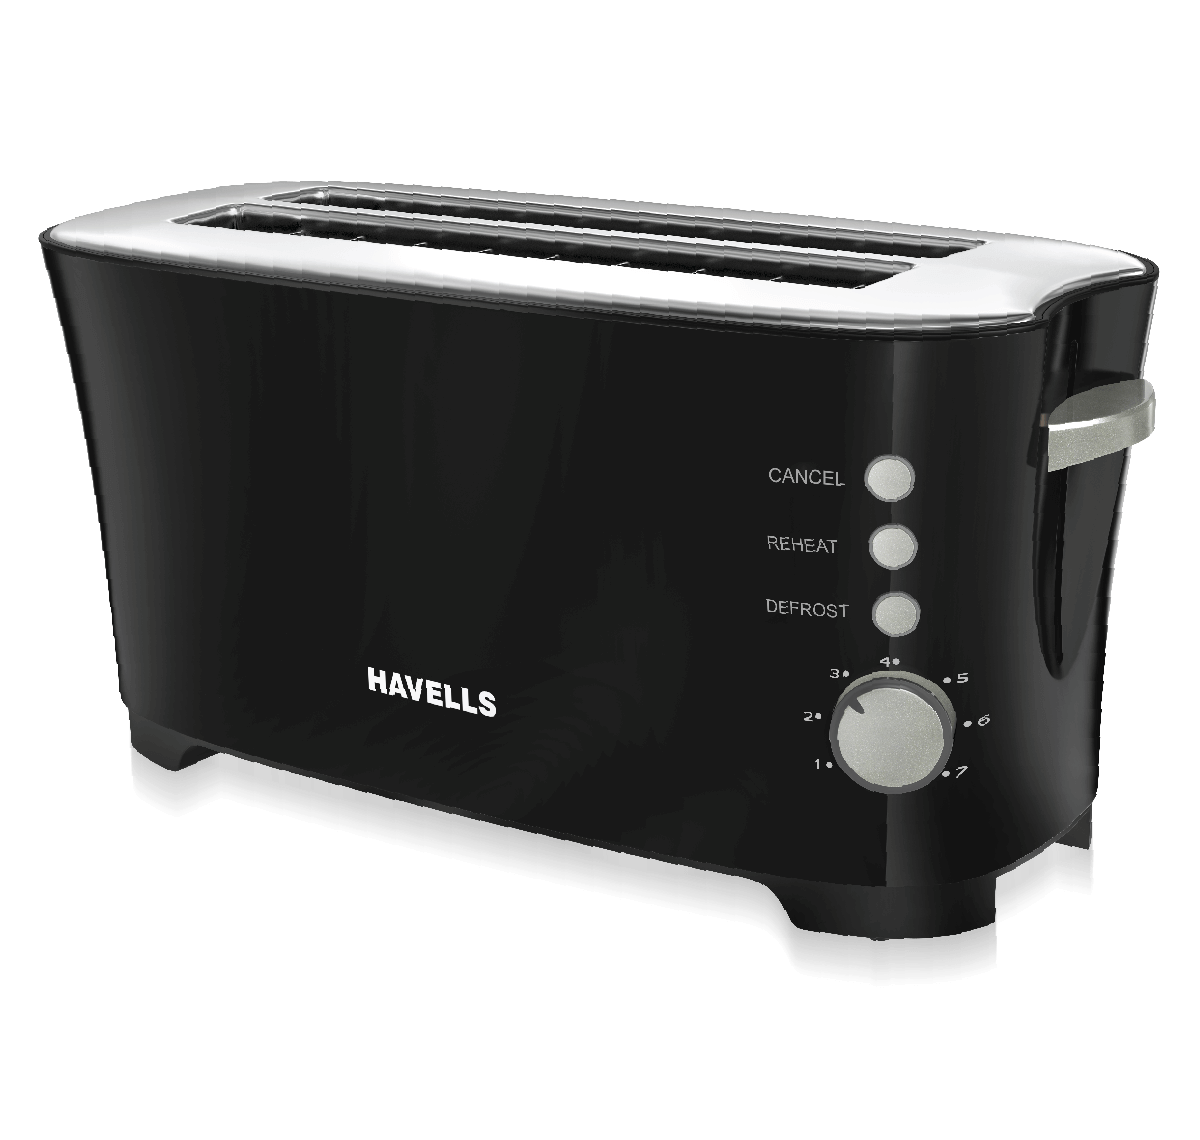 buy-pop-up-toaster-feasto-4-slice-pop-toaster-1350-w-illuminated-defrost-reheat-crumb-tray